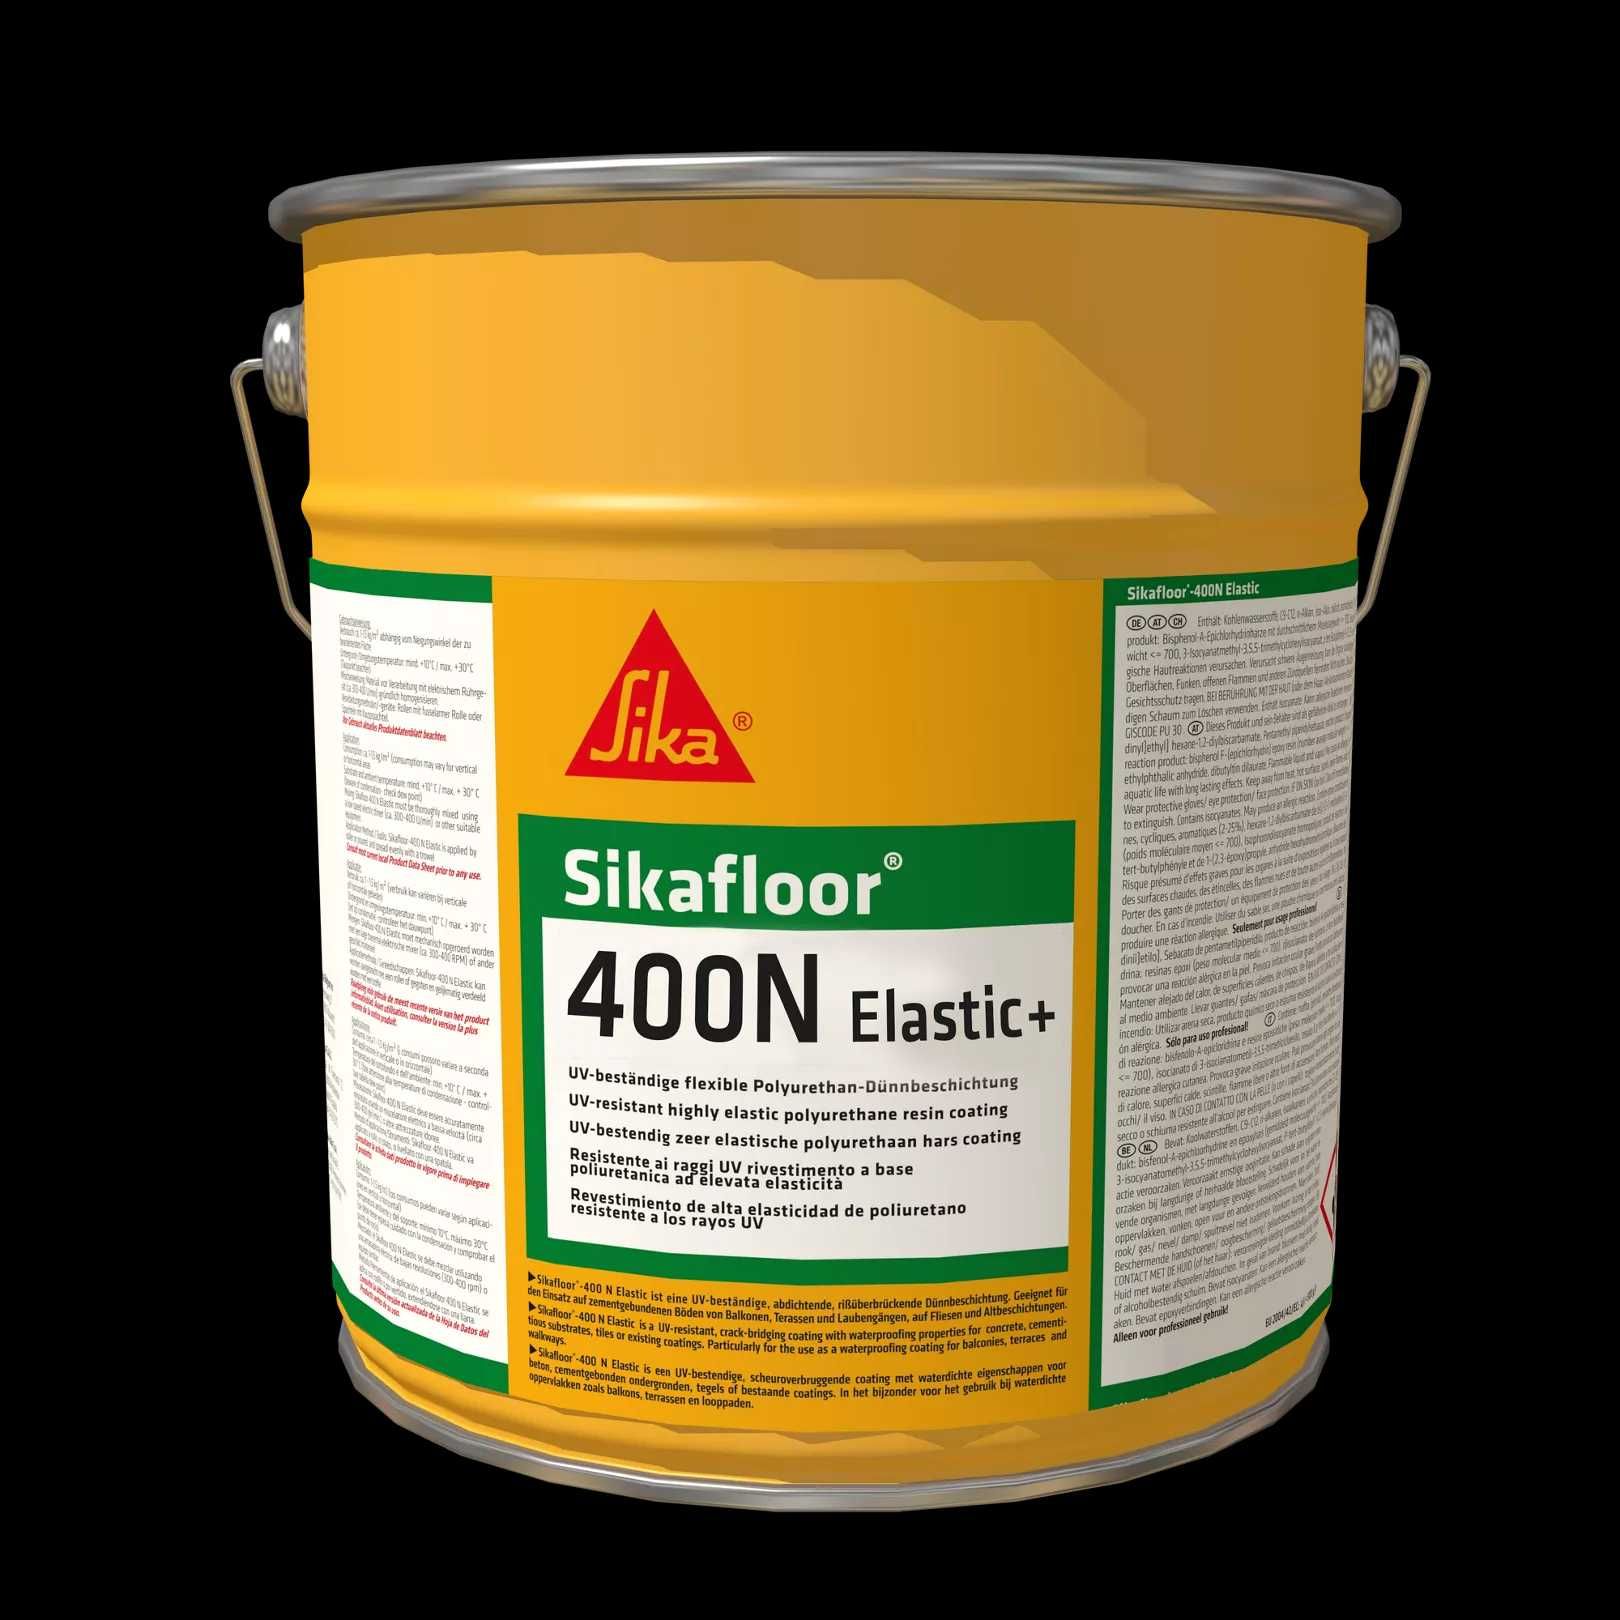 Sikafloor®-400 N Elastic+